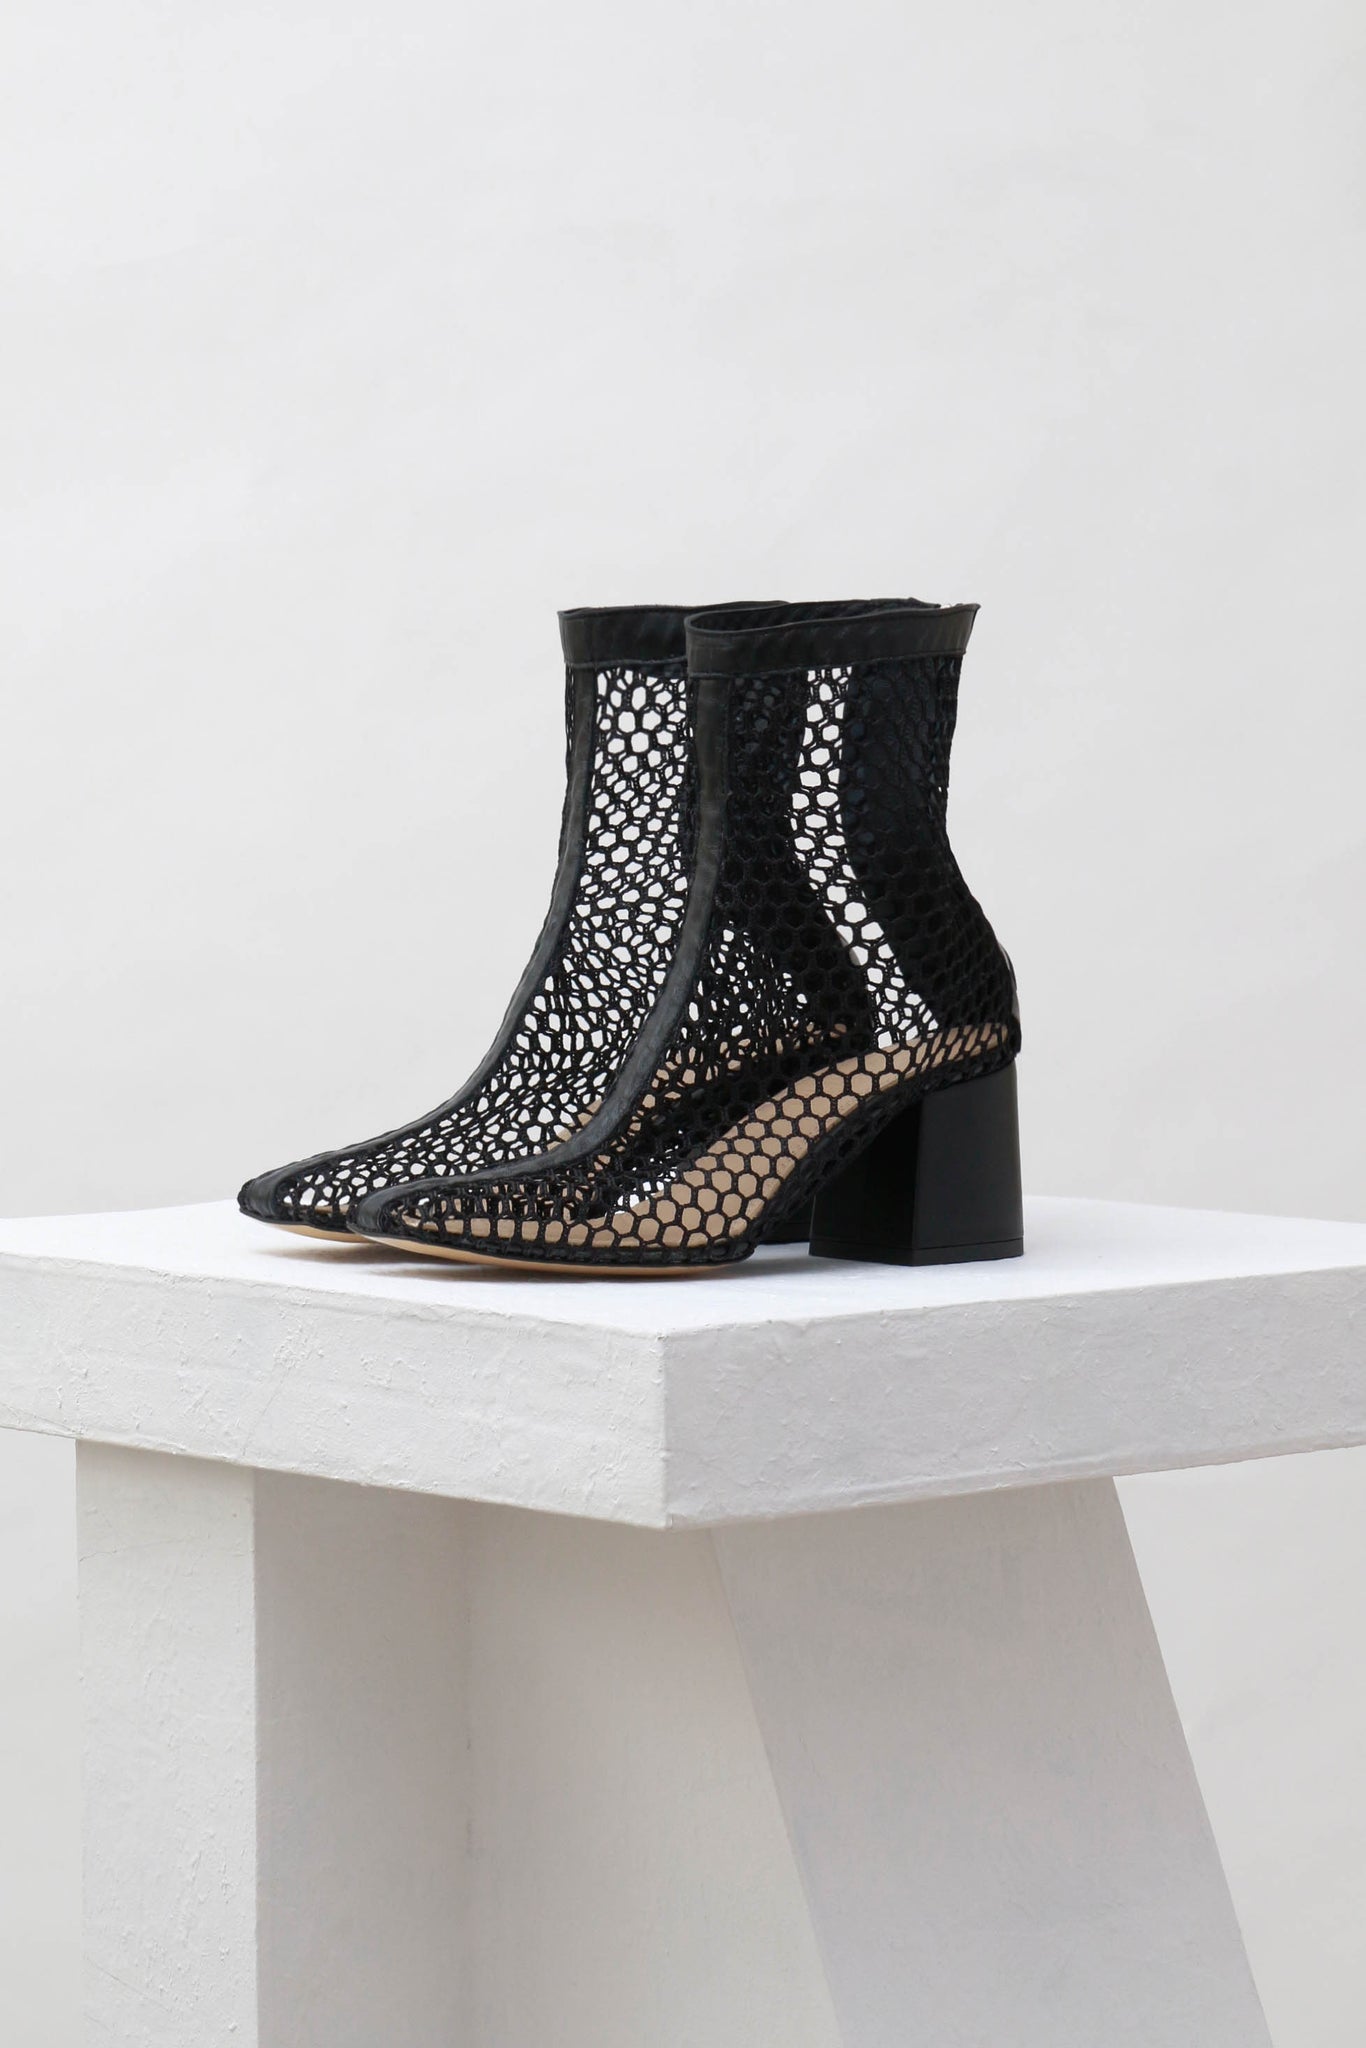 Souliers Martinez Shoes FIRME - Black Mesh Boots 